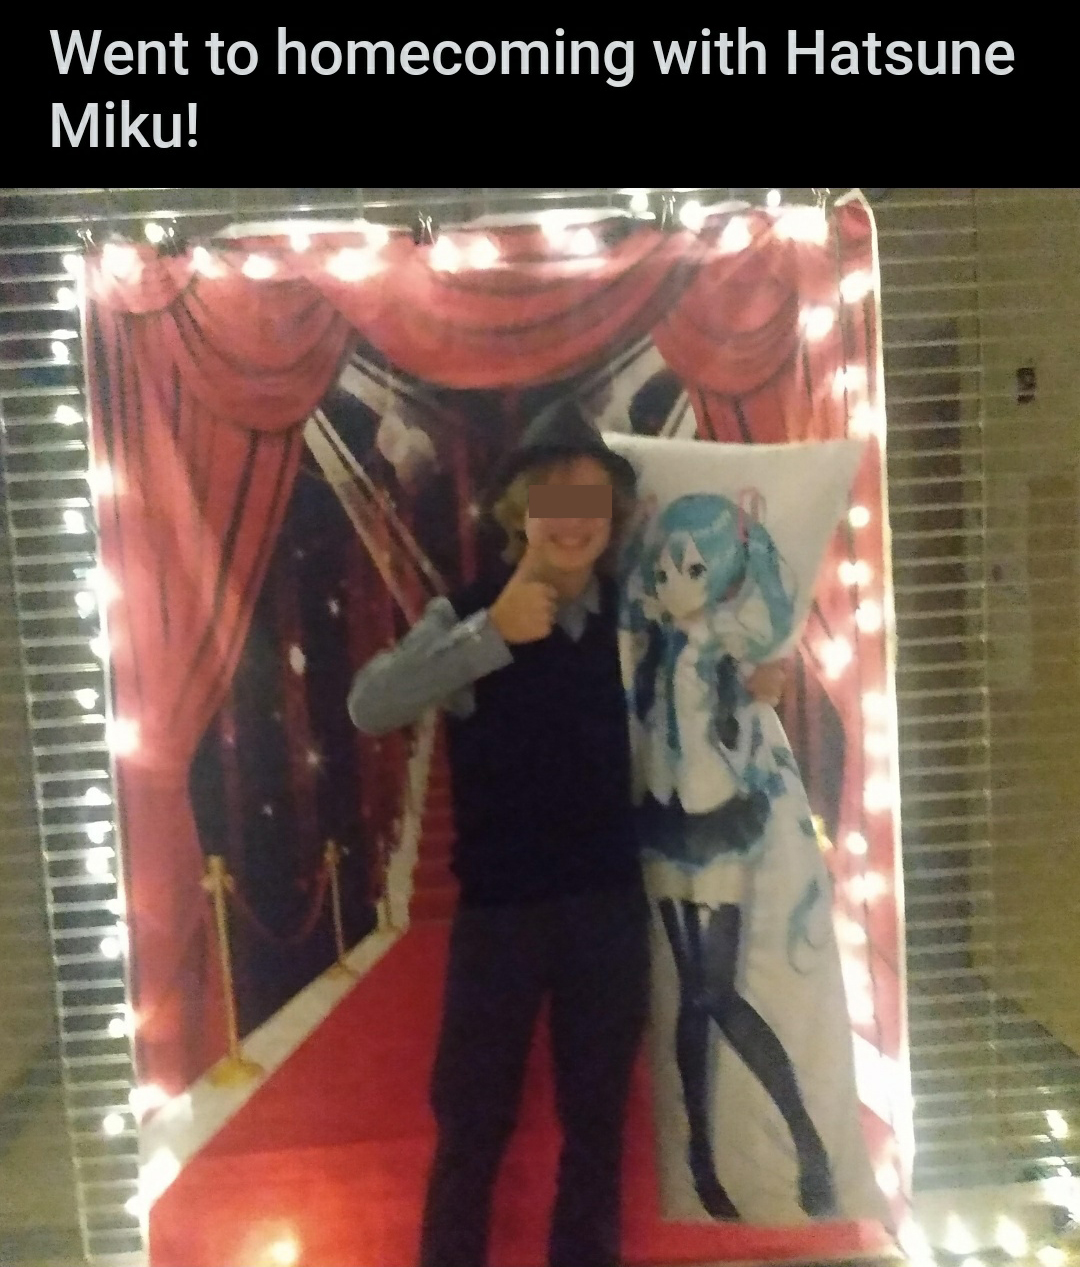 cringeworthy pics - Went to homecoming with Hatsune Miku! !